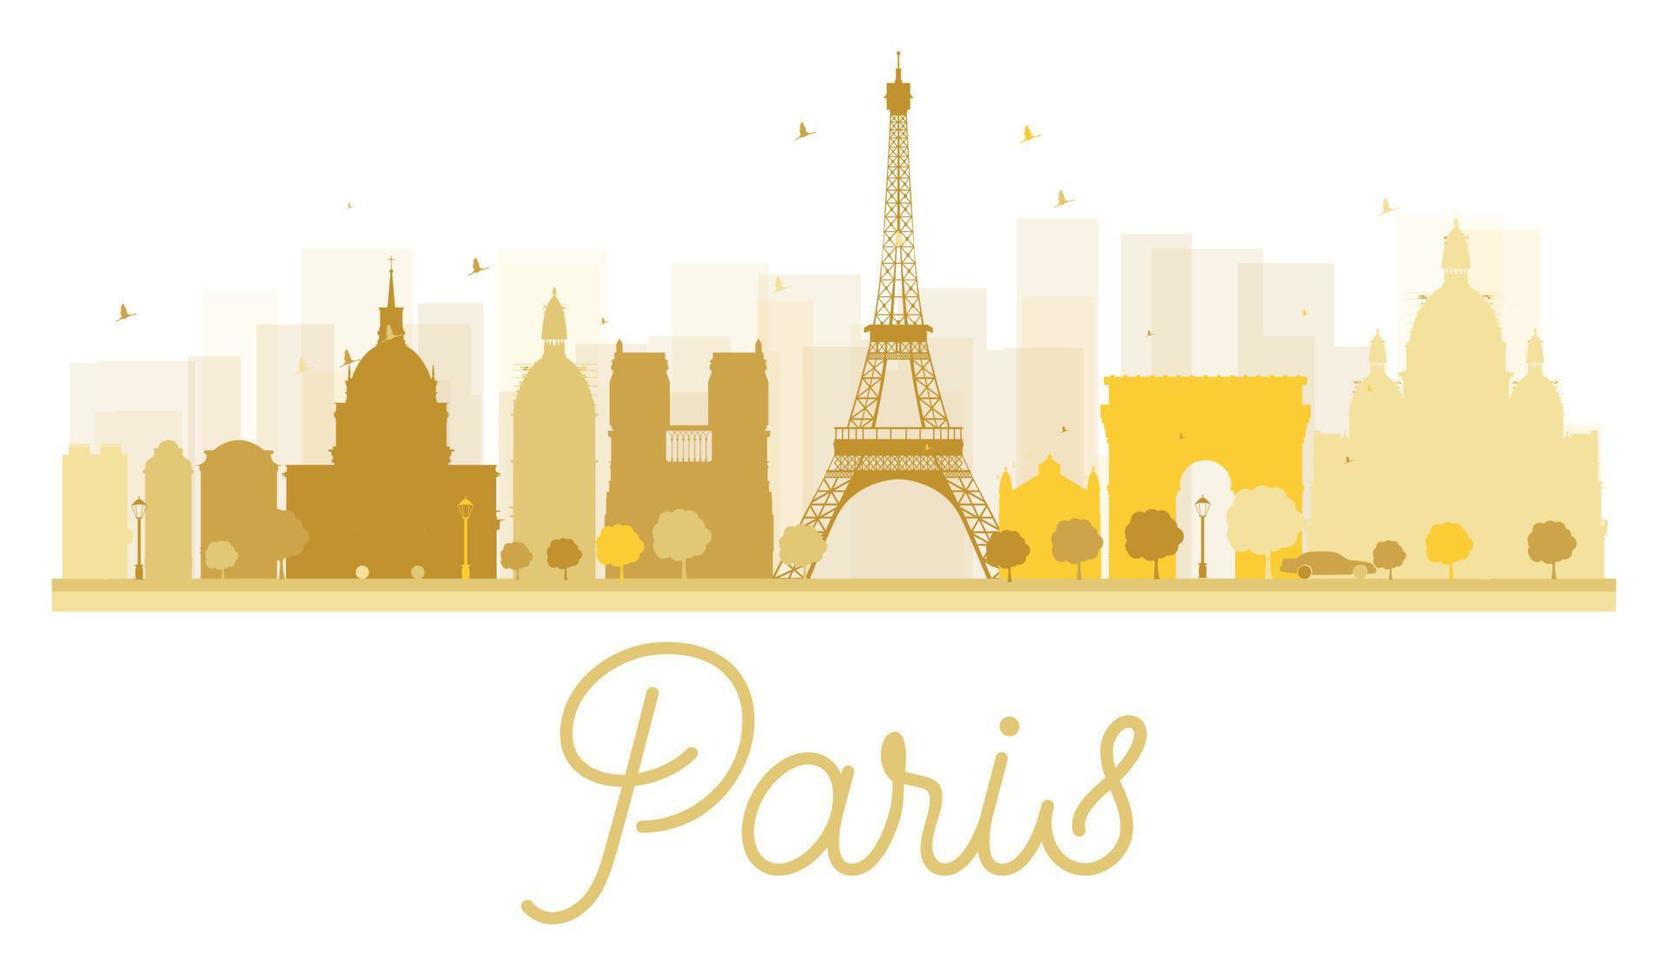 Paris City skyline golden silhouette. vector